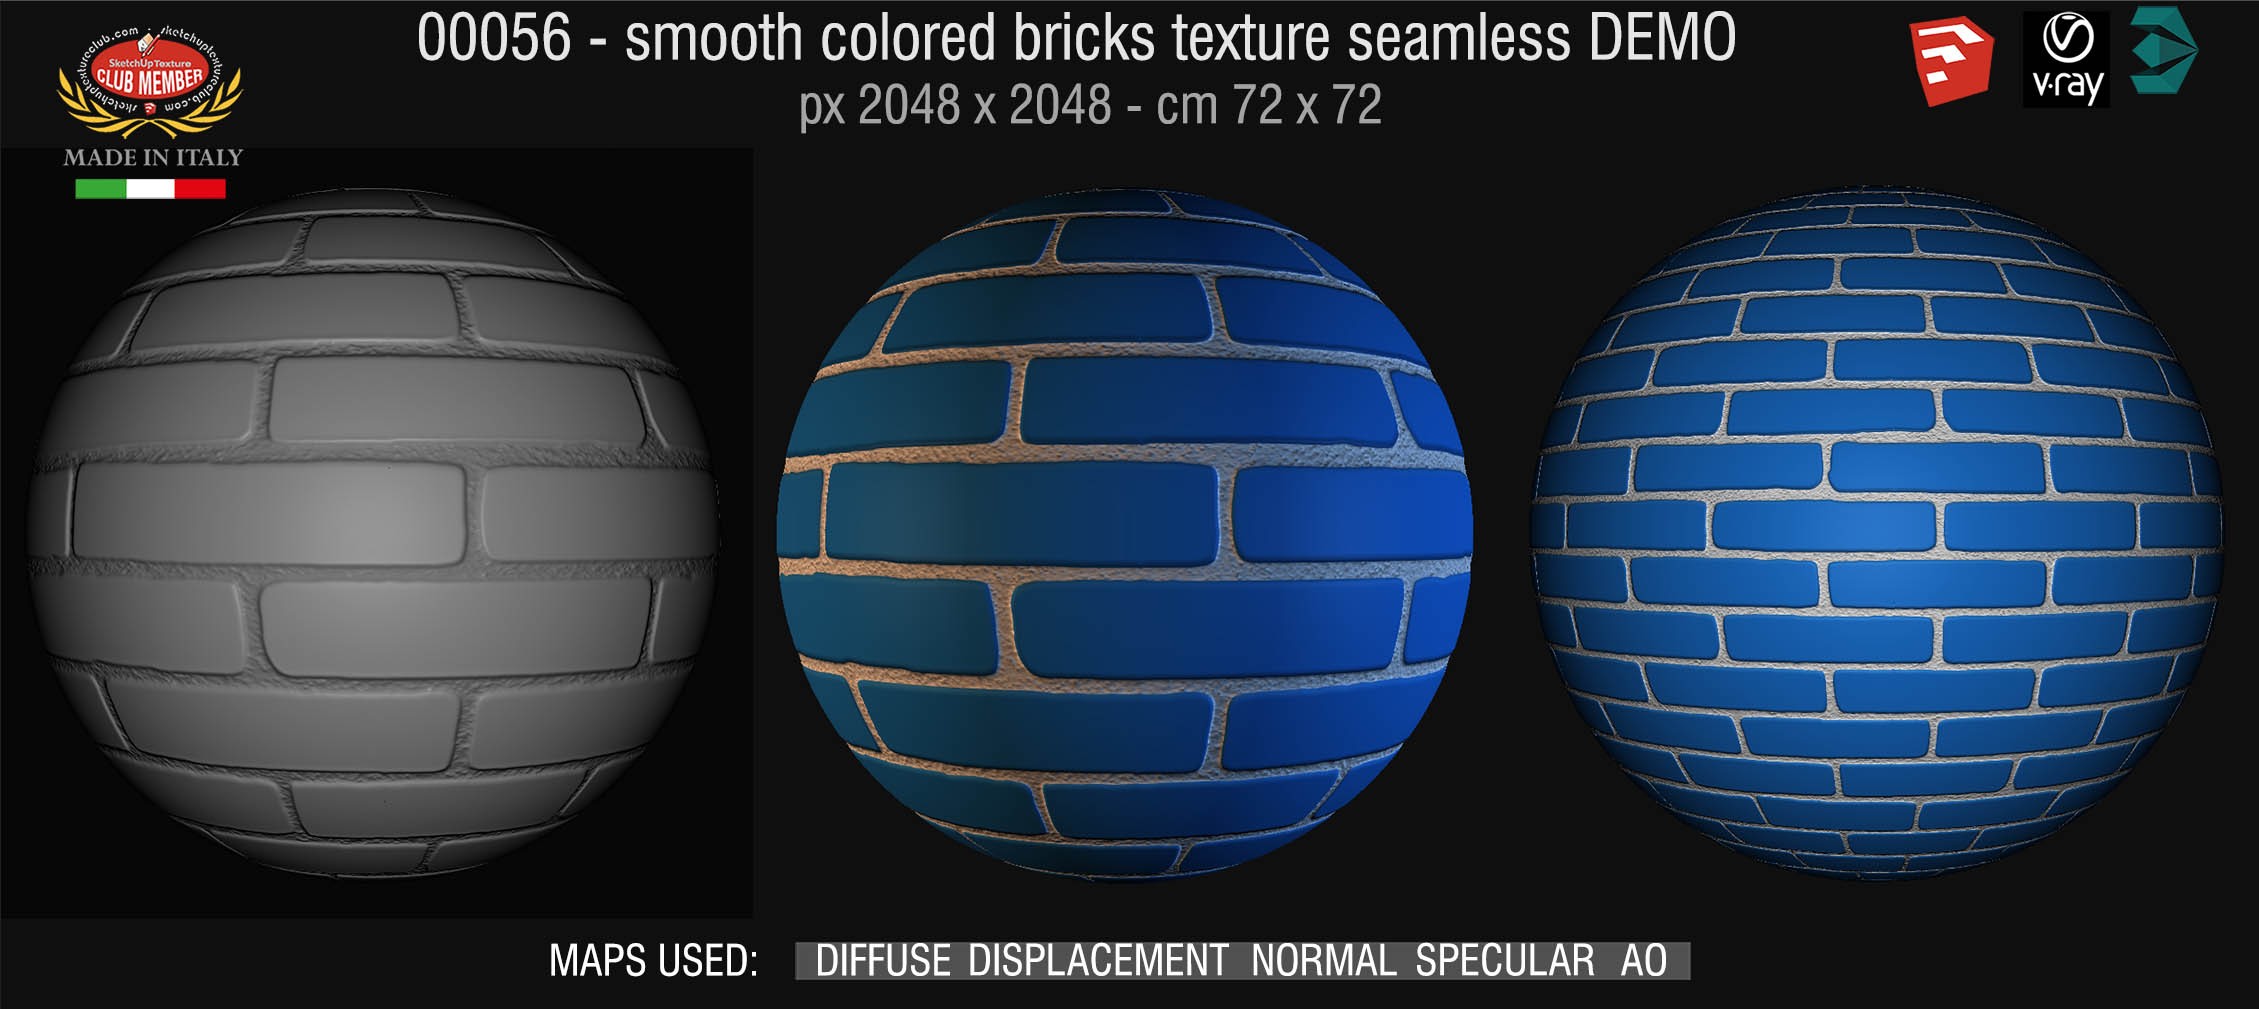 00056 smooth colored bricks texture seamless + maps DEMO